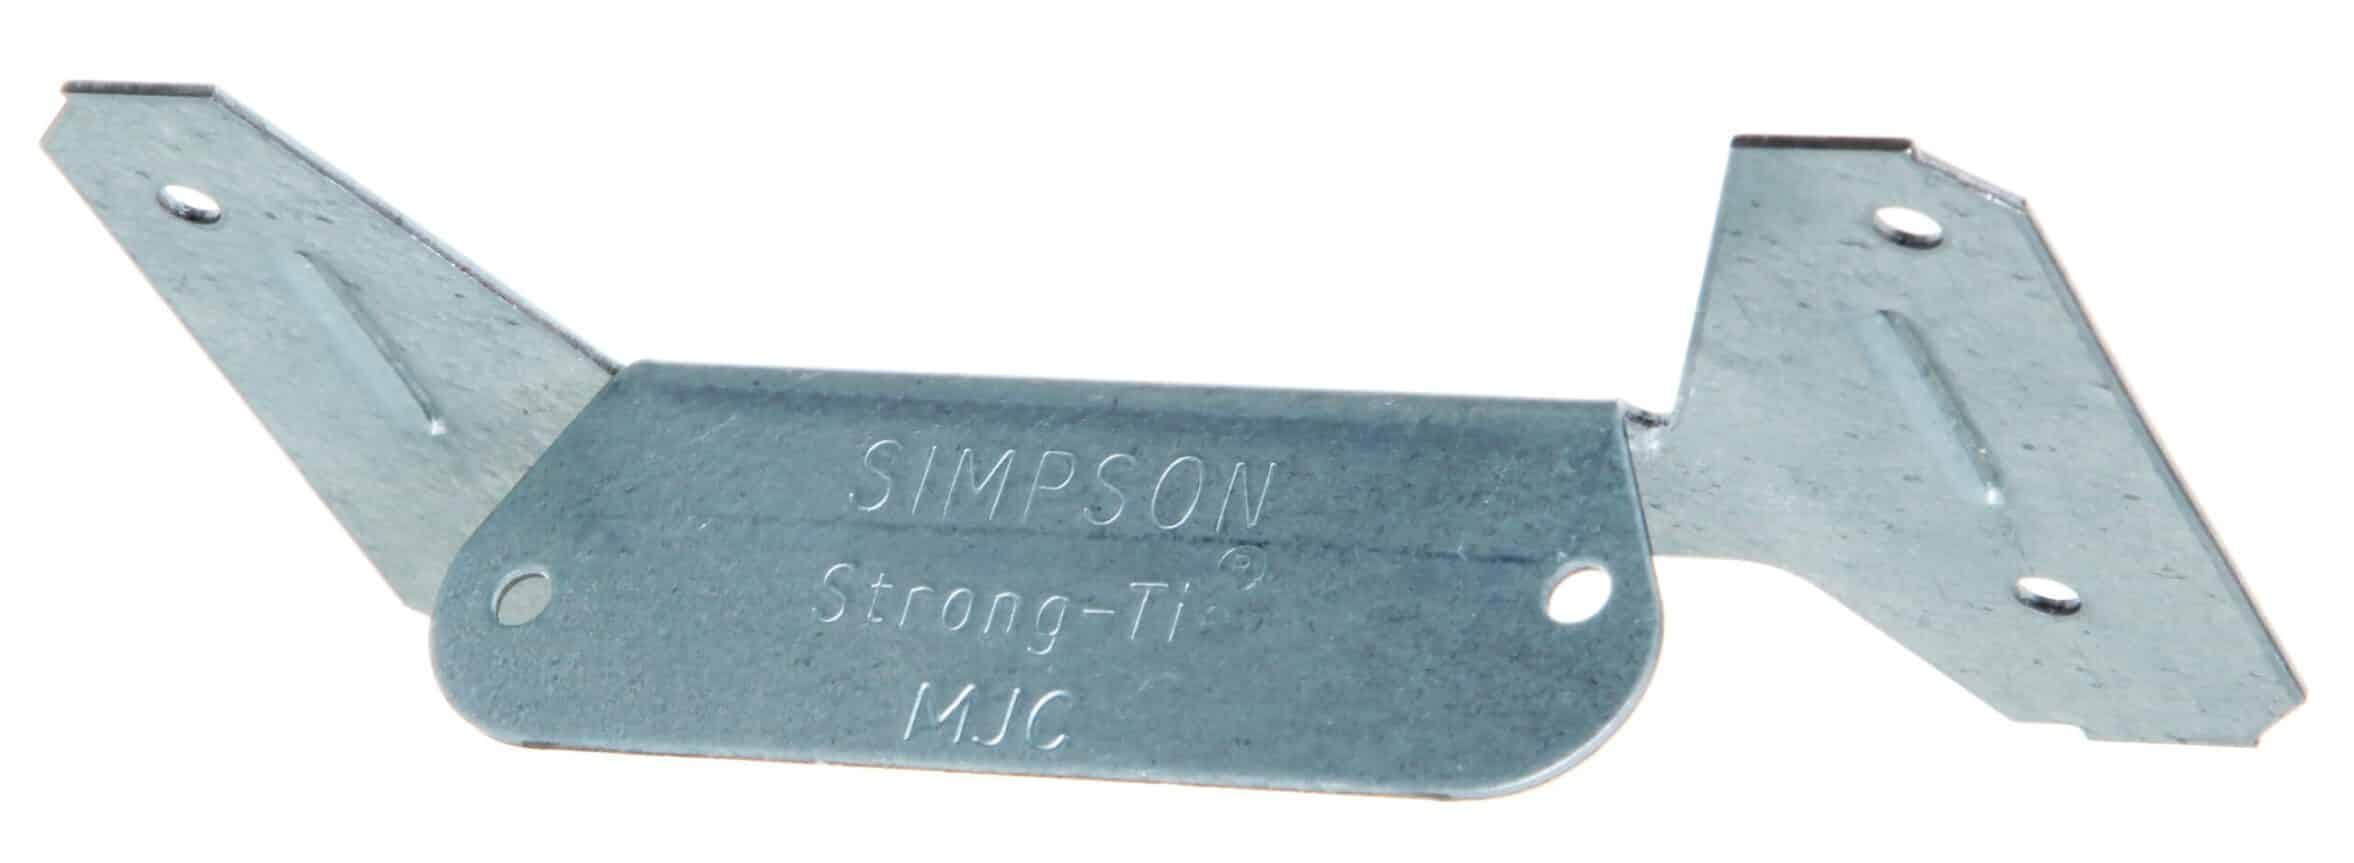 Simpson Strong-Tie MJC Multiple Metal Web Joist Connector Pre Galvanised Mild Steel